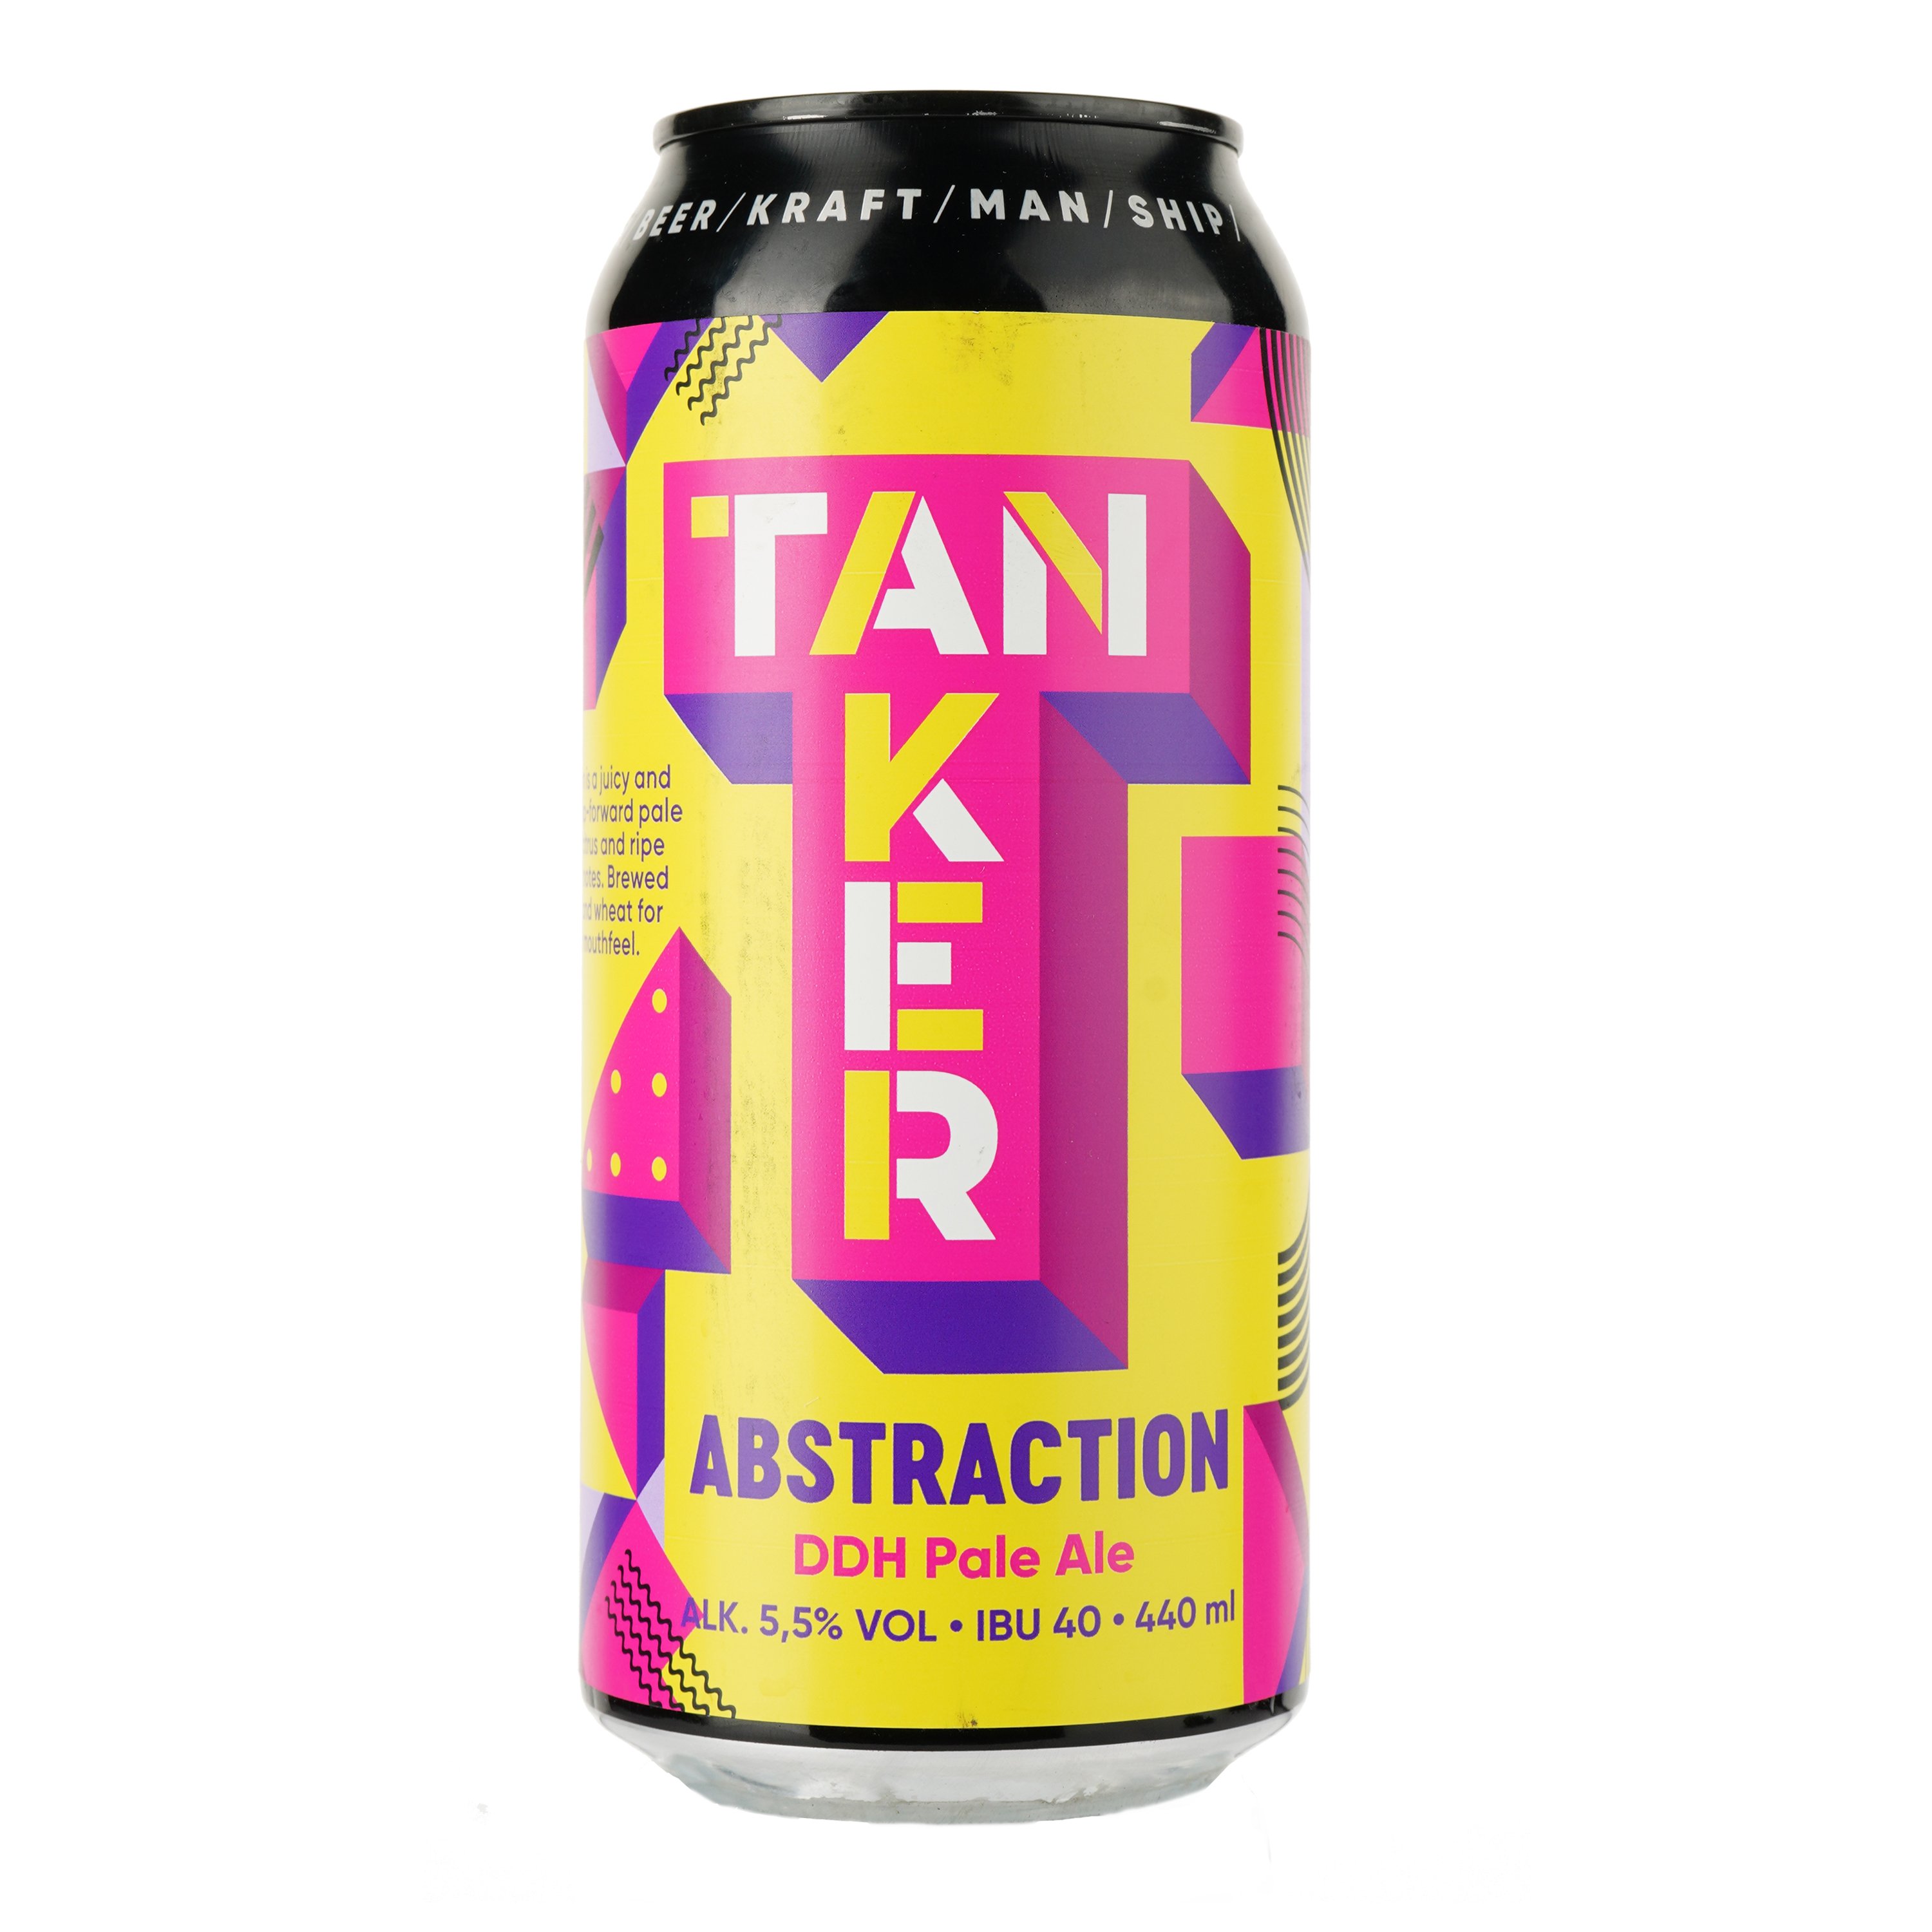 Пиво Tanker Abstract DDH Pale Ale, светлое, нефильтрованное, 5,5%, ж/б, 0,44 л - фото 1